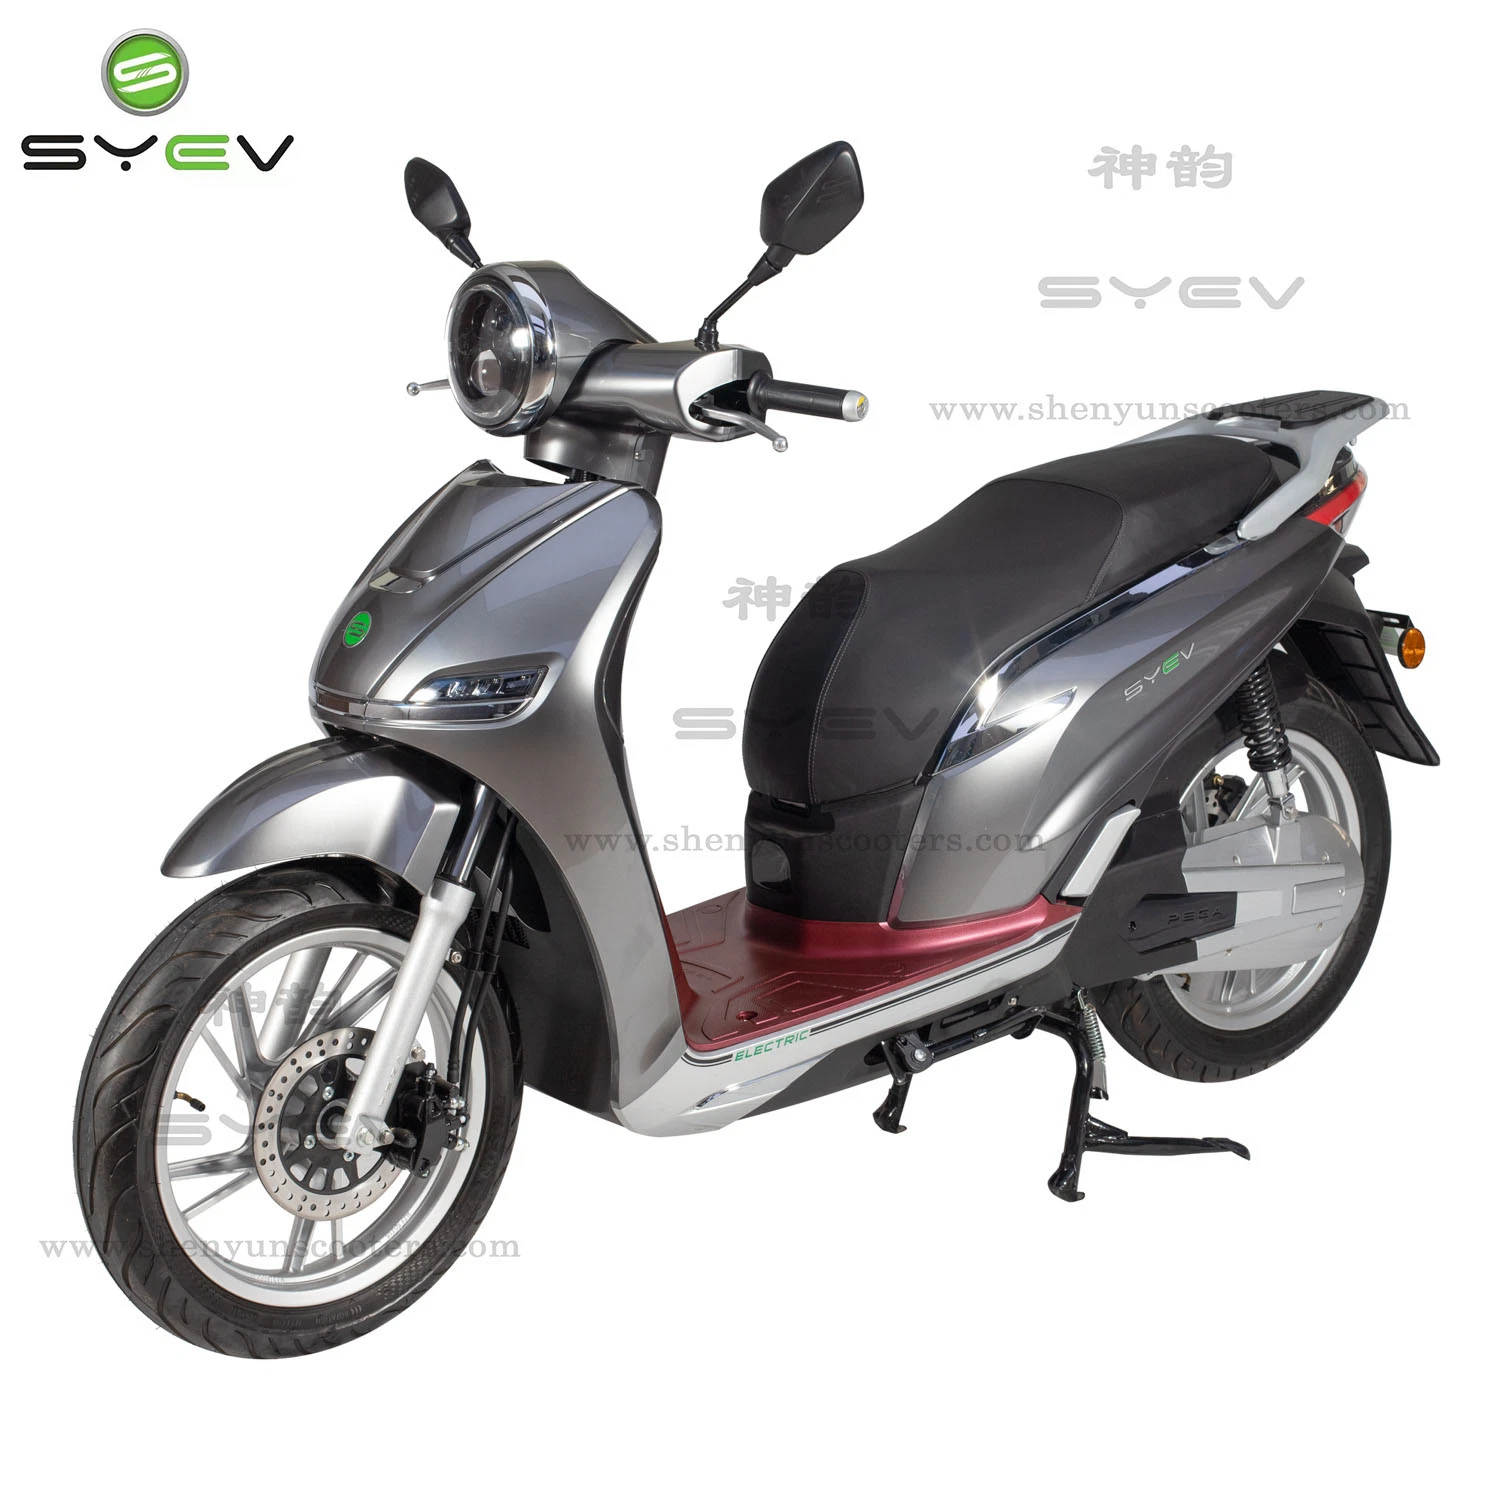 Professionelle ATL Lithium Power Fahrrad 3000W Racing Elektro Motorrad gemacht In China